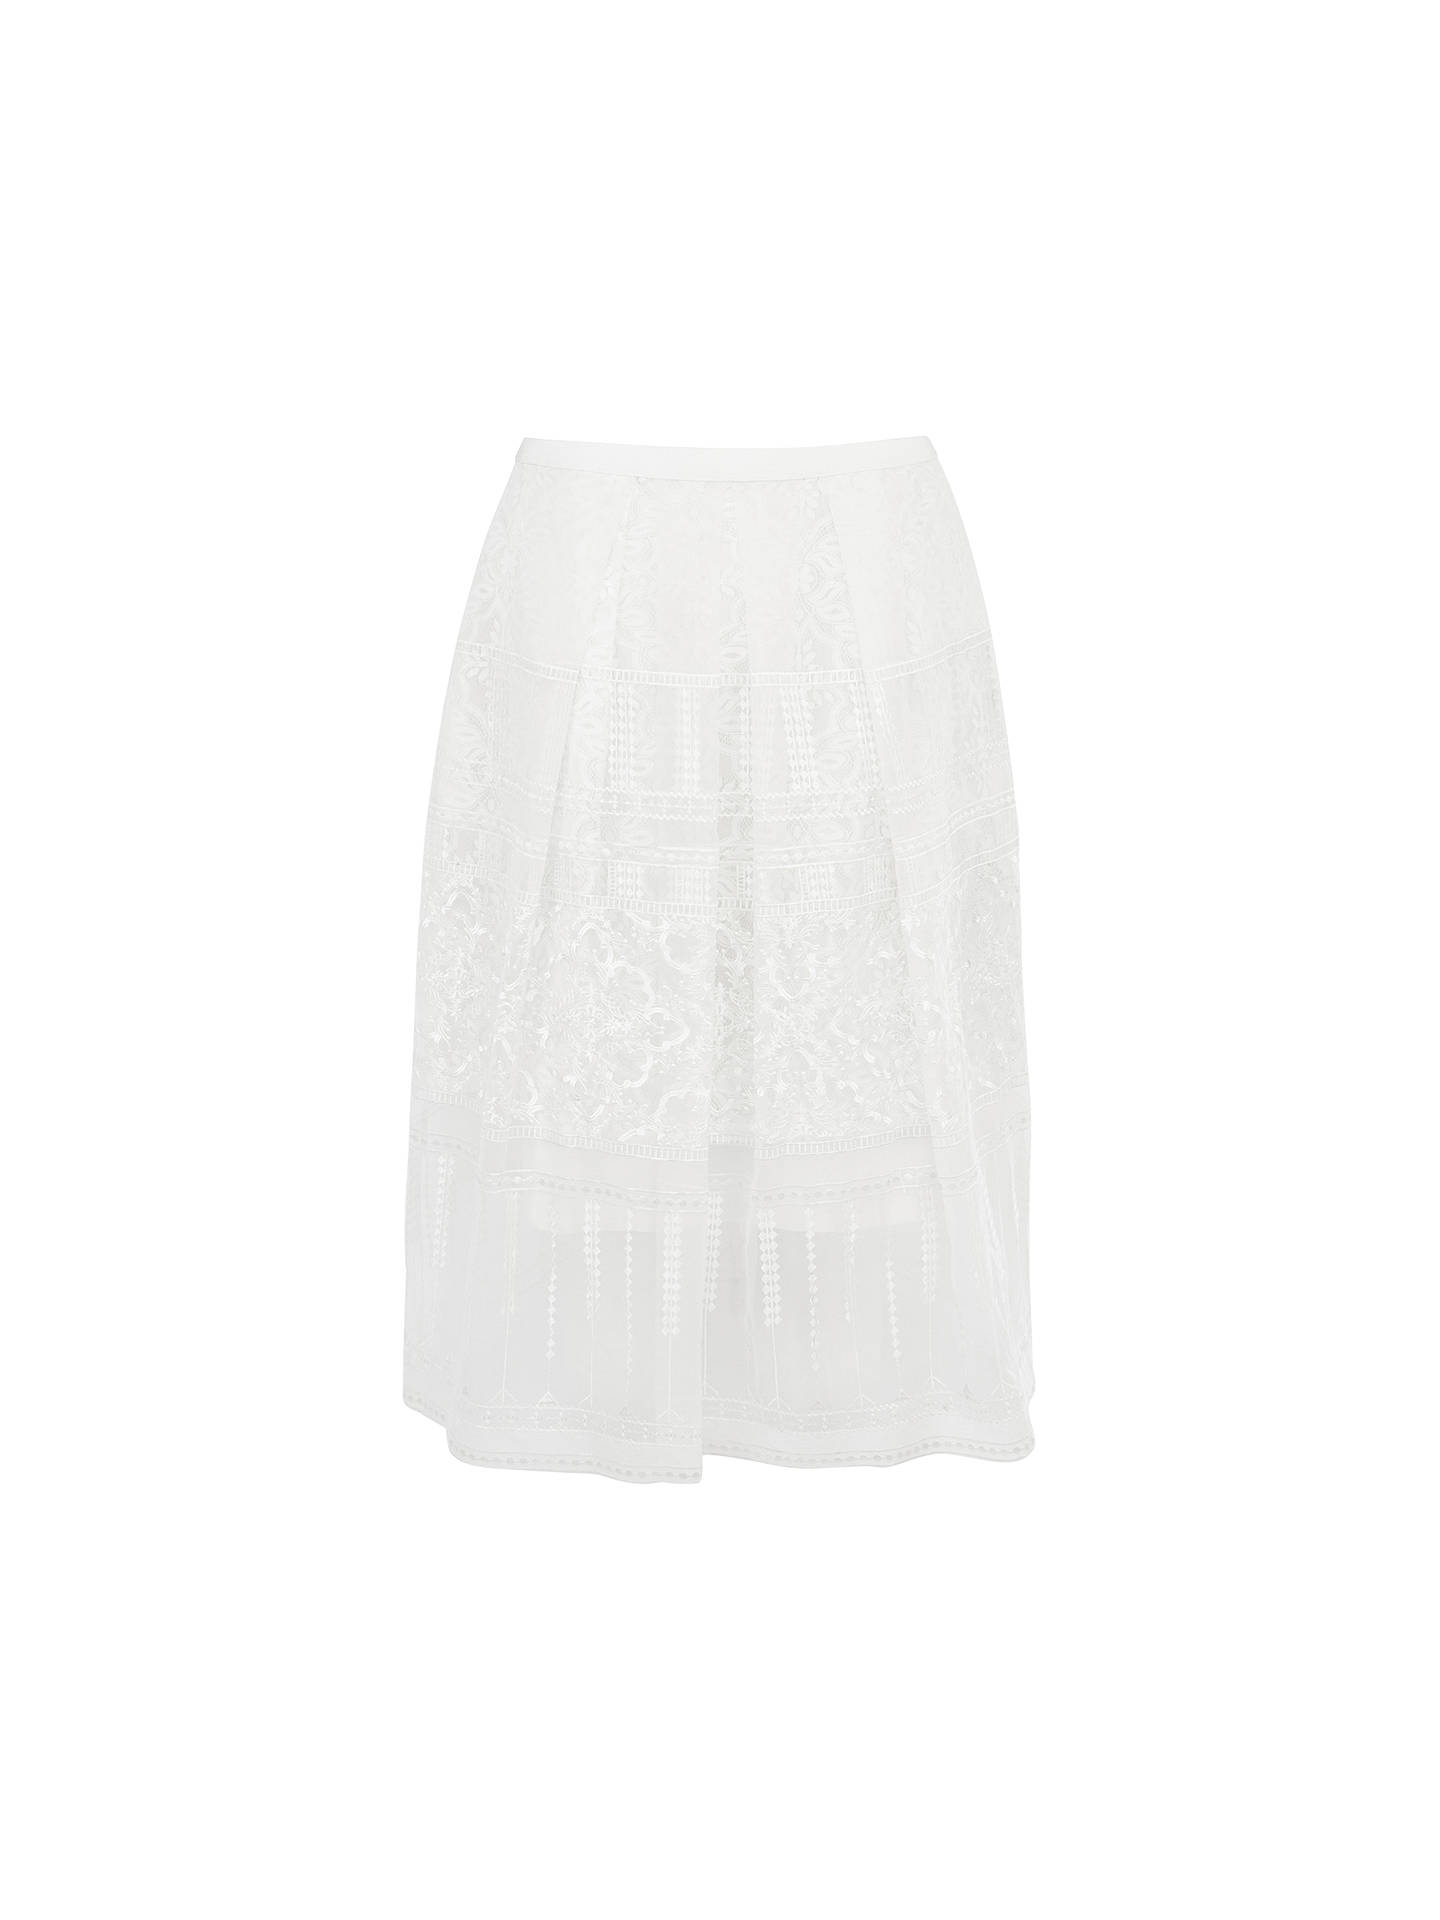 Karen Millen Embroidered Organza Skirt, White at John Lewis & Partners